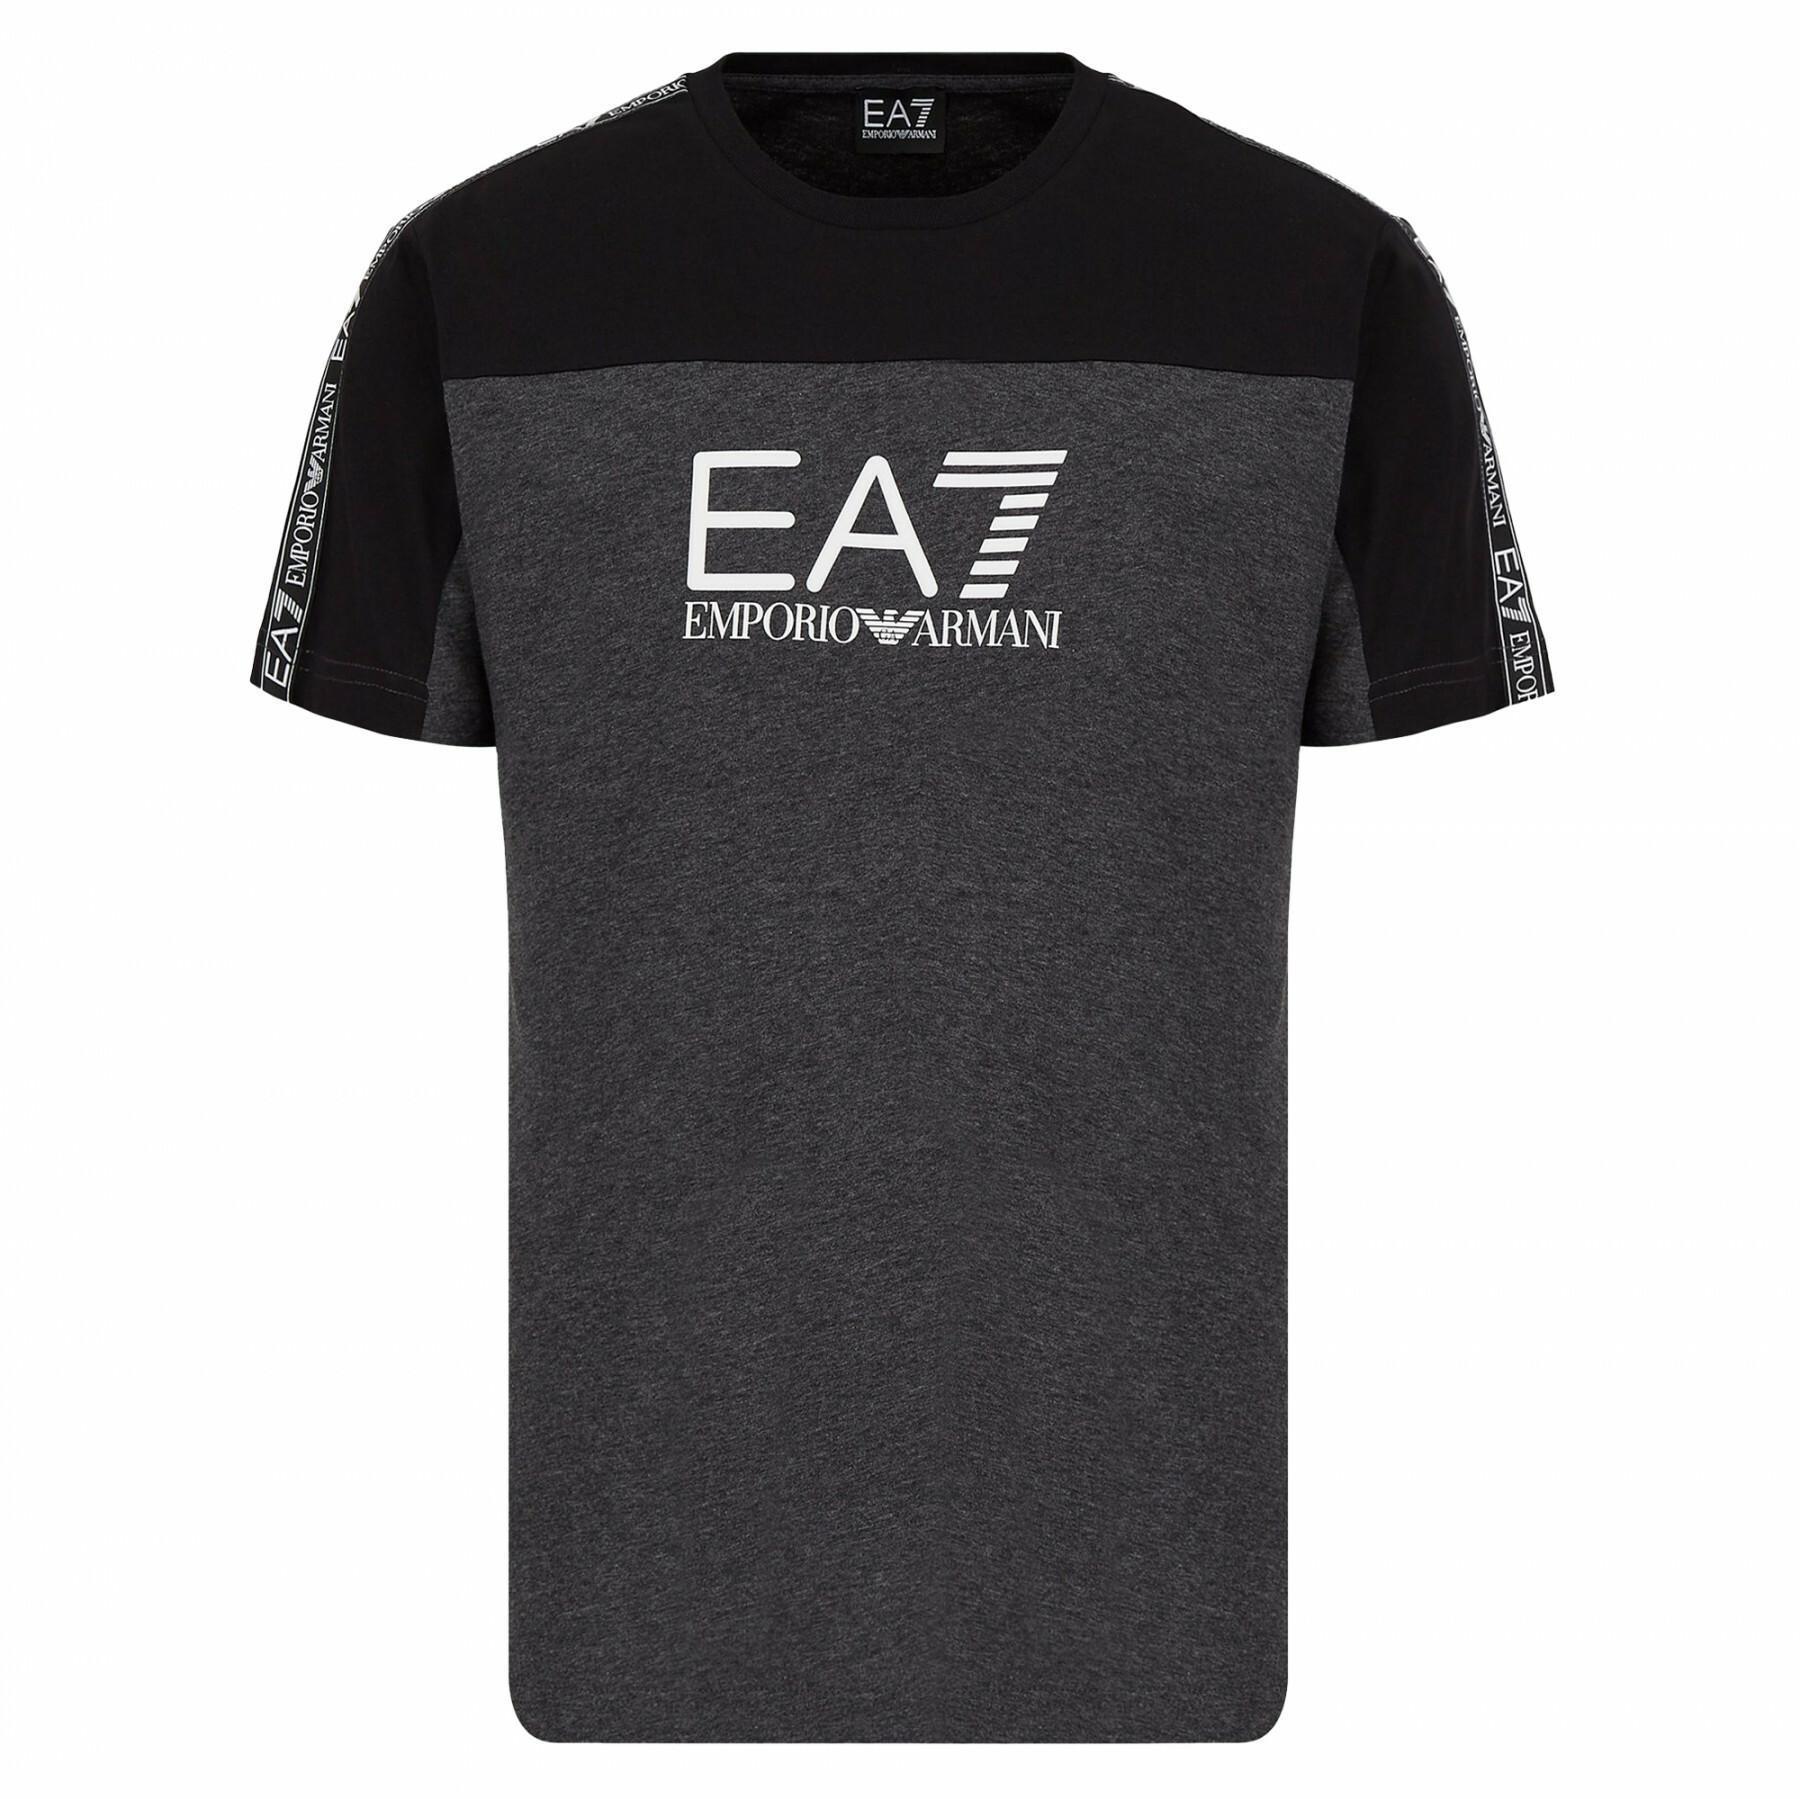 T-shirt EA7 Emporio Armani 6KPT10-PJ7CZ carbon